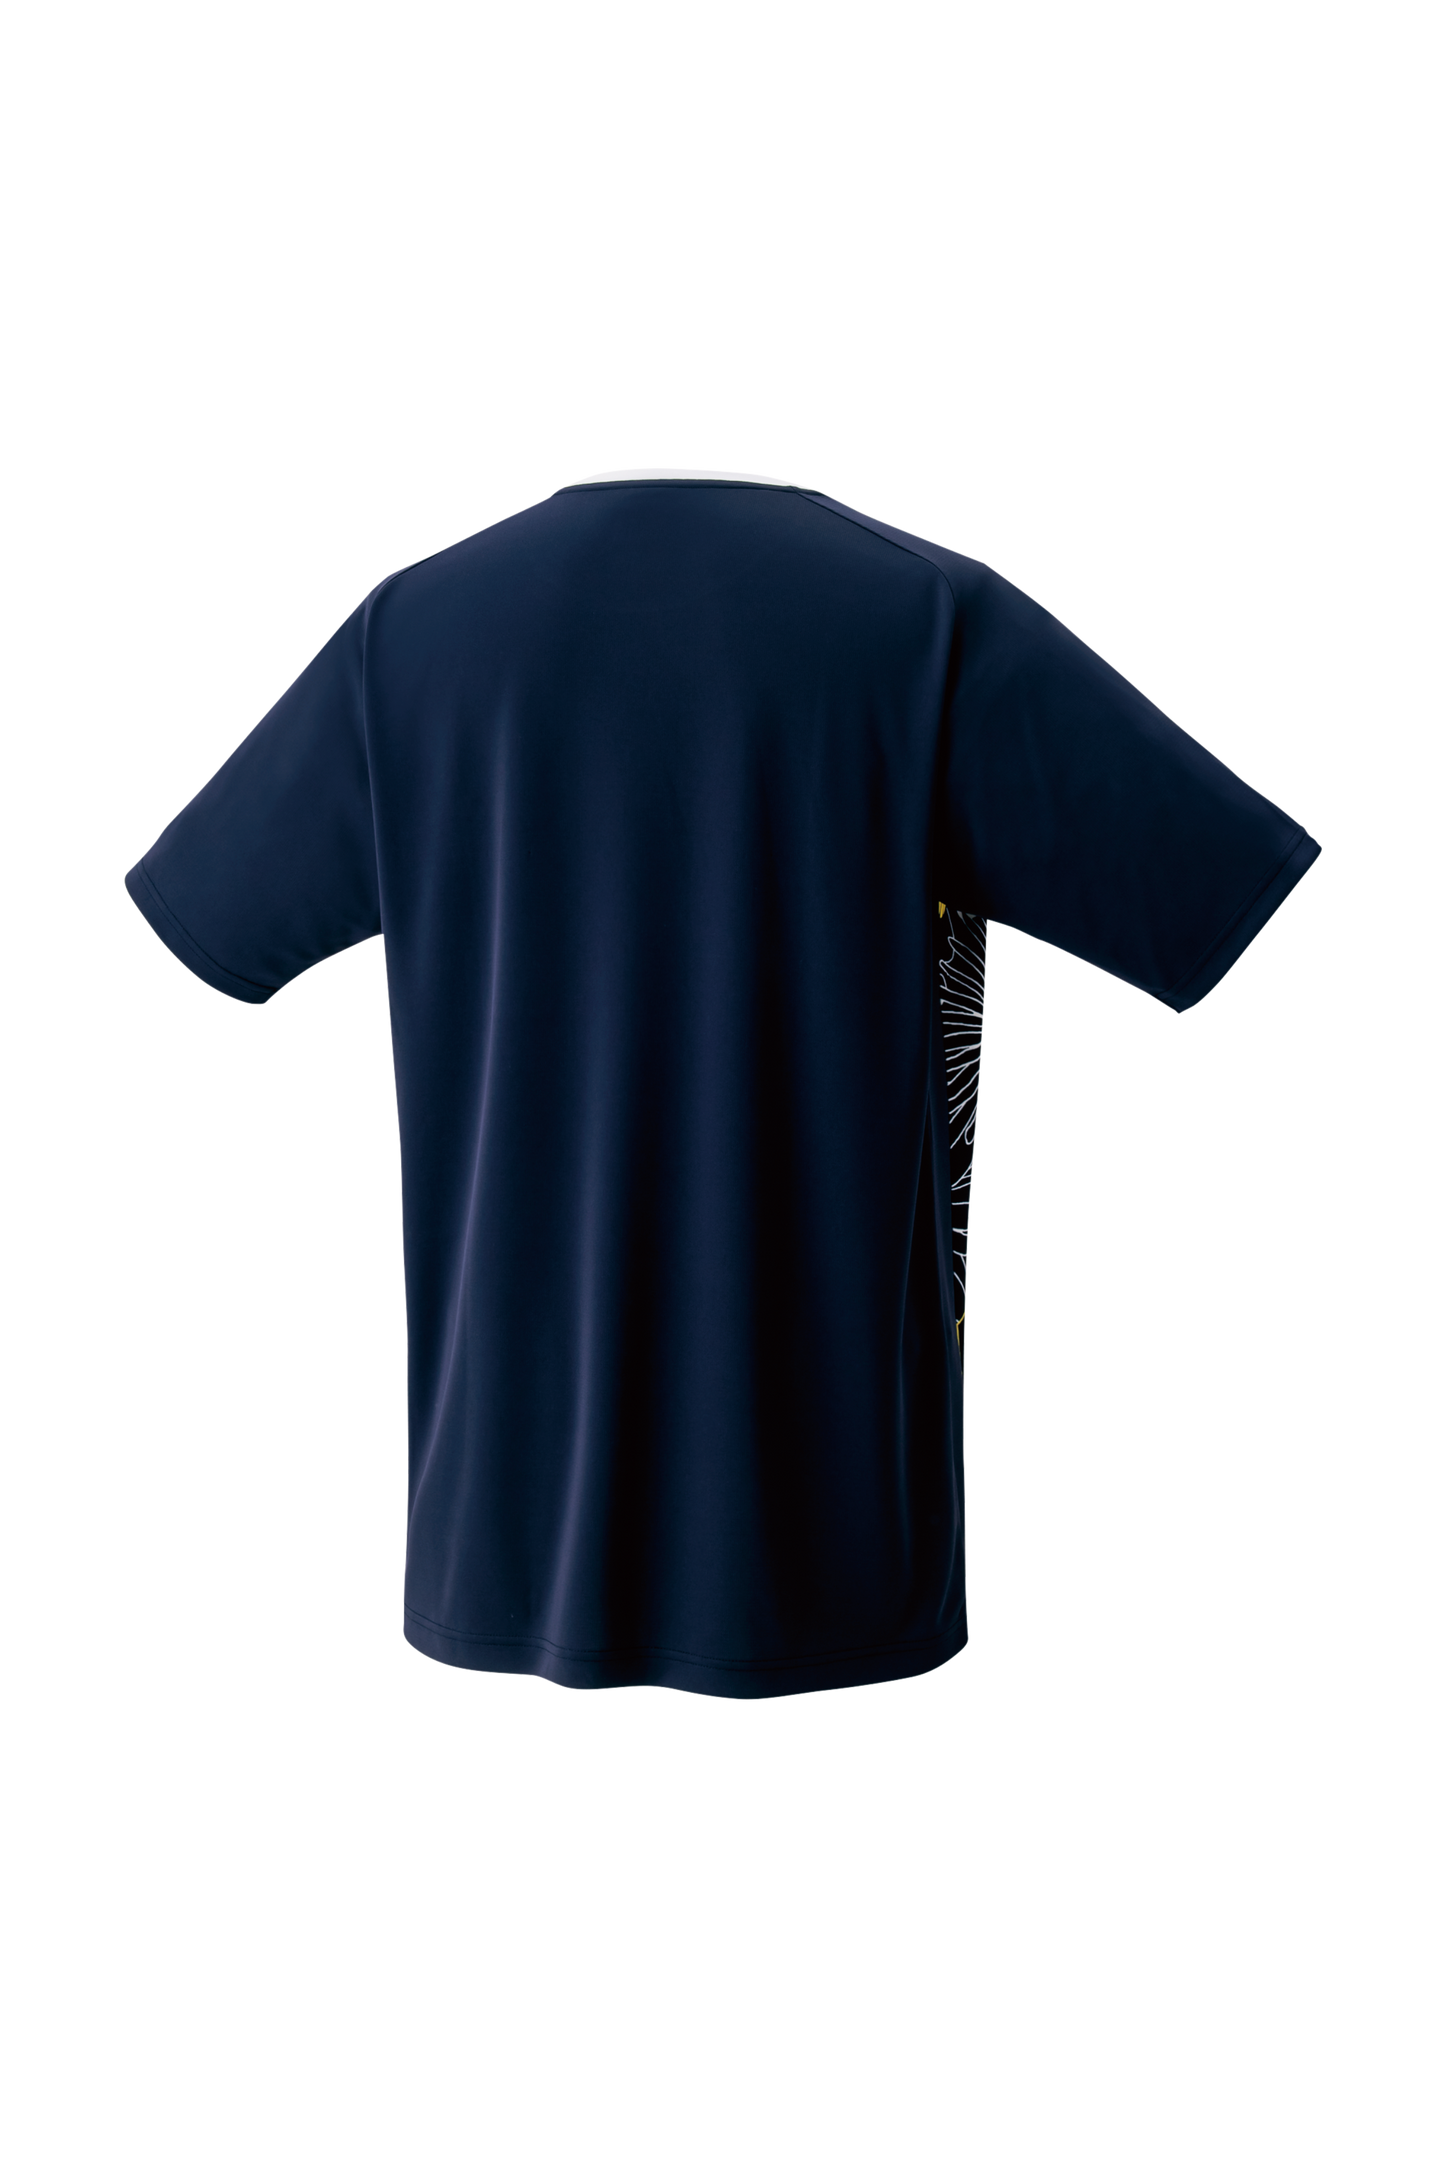 YONEX Men's Badminton Shirt 16632 GIDEON / SUKAMULJO REPLICA - Max Sports